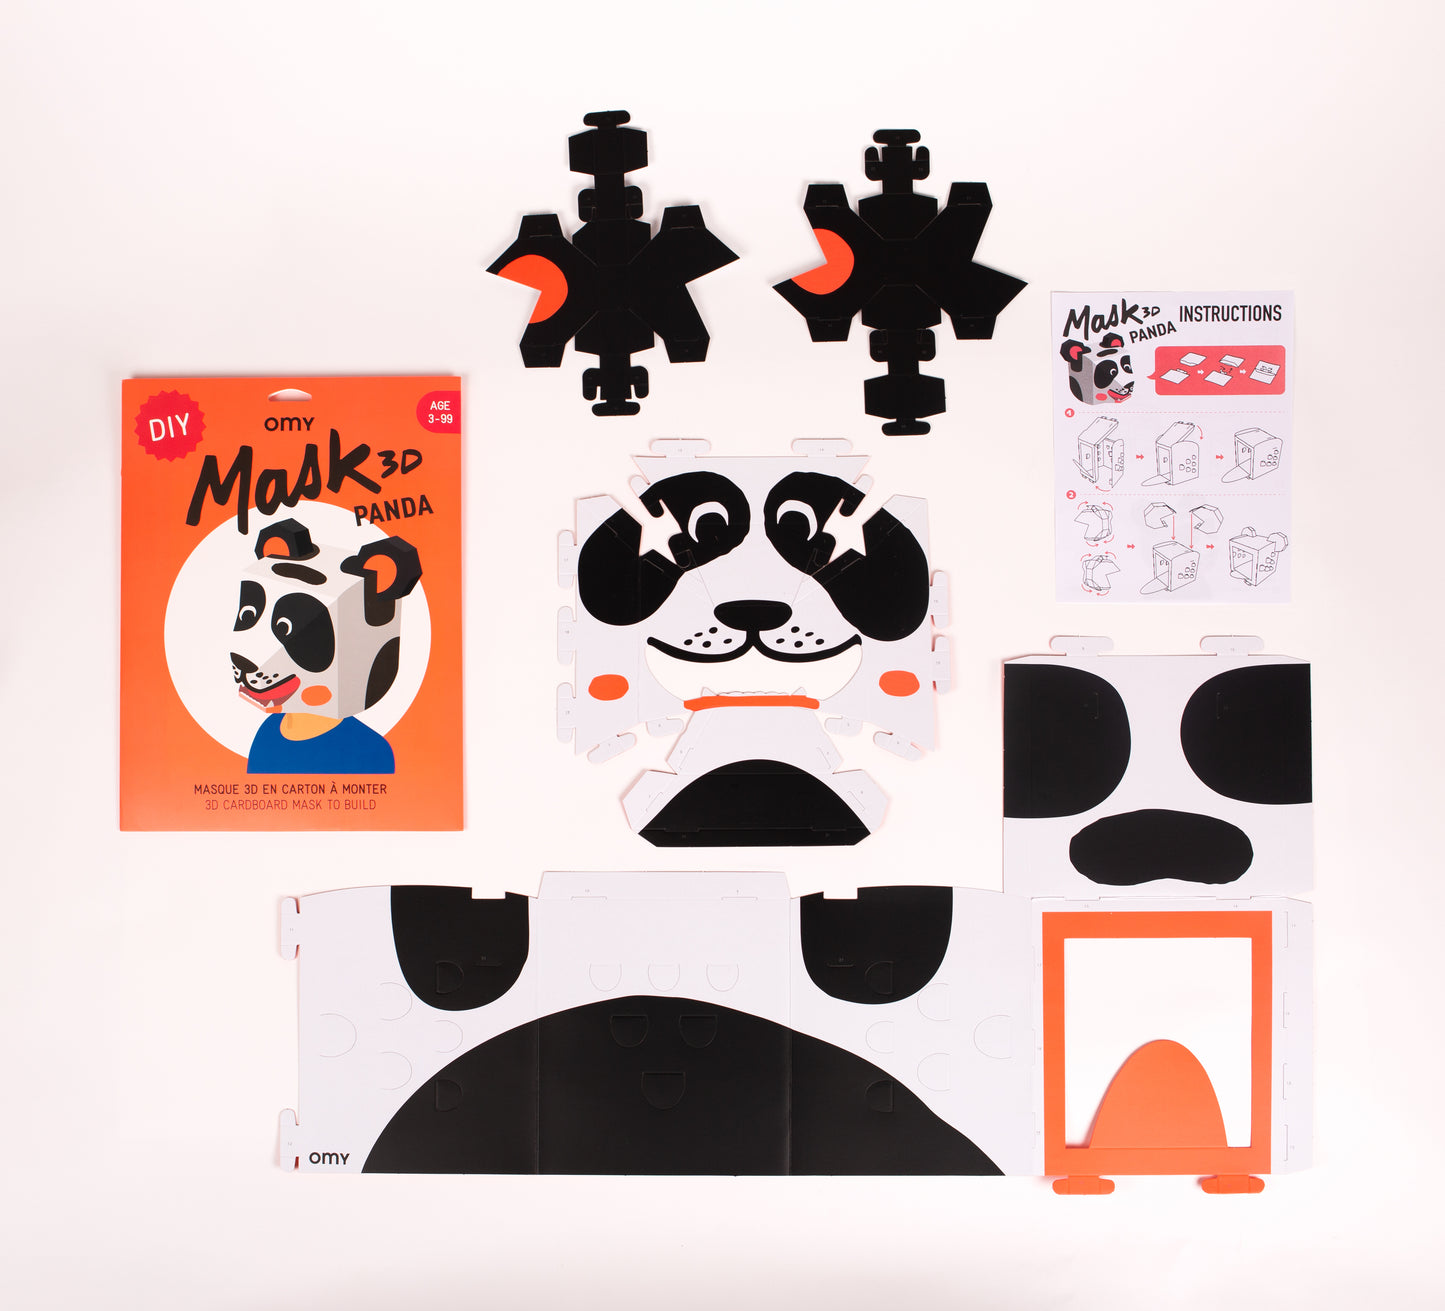 Omy - Panda 3D mask